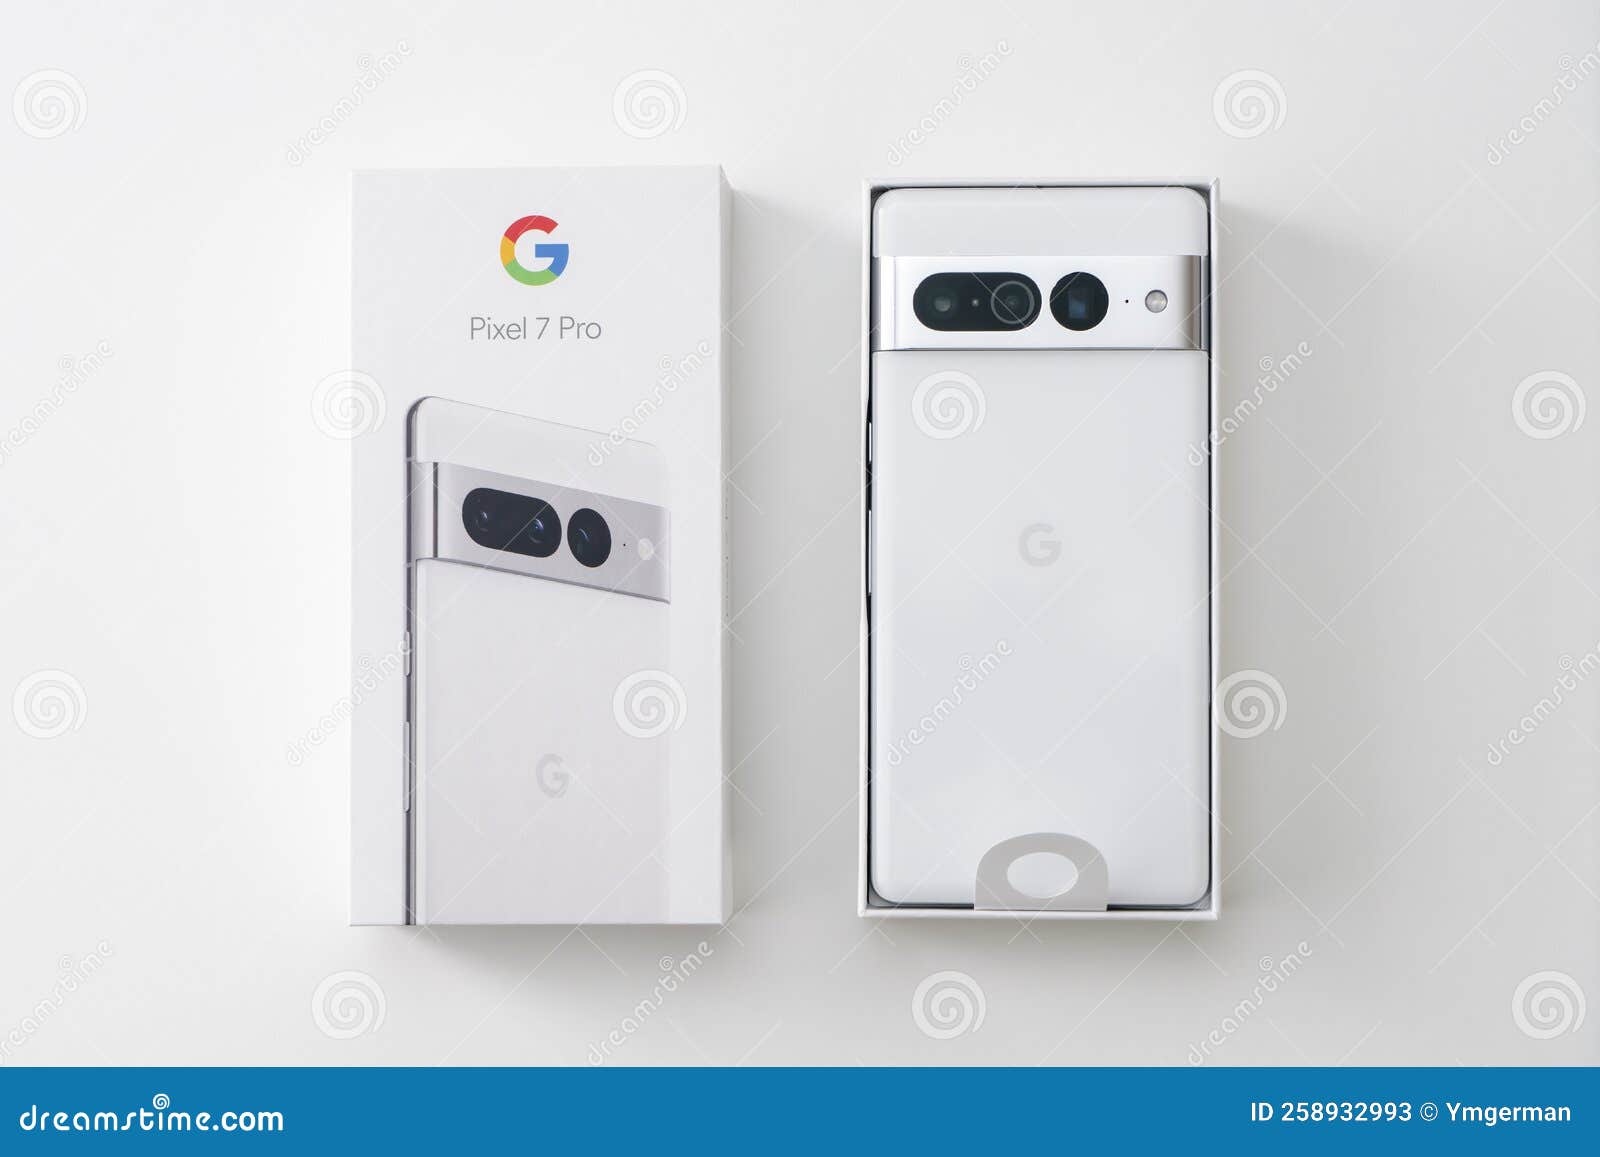 Google Pixel Tablet Unboxing! 